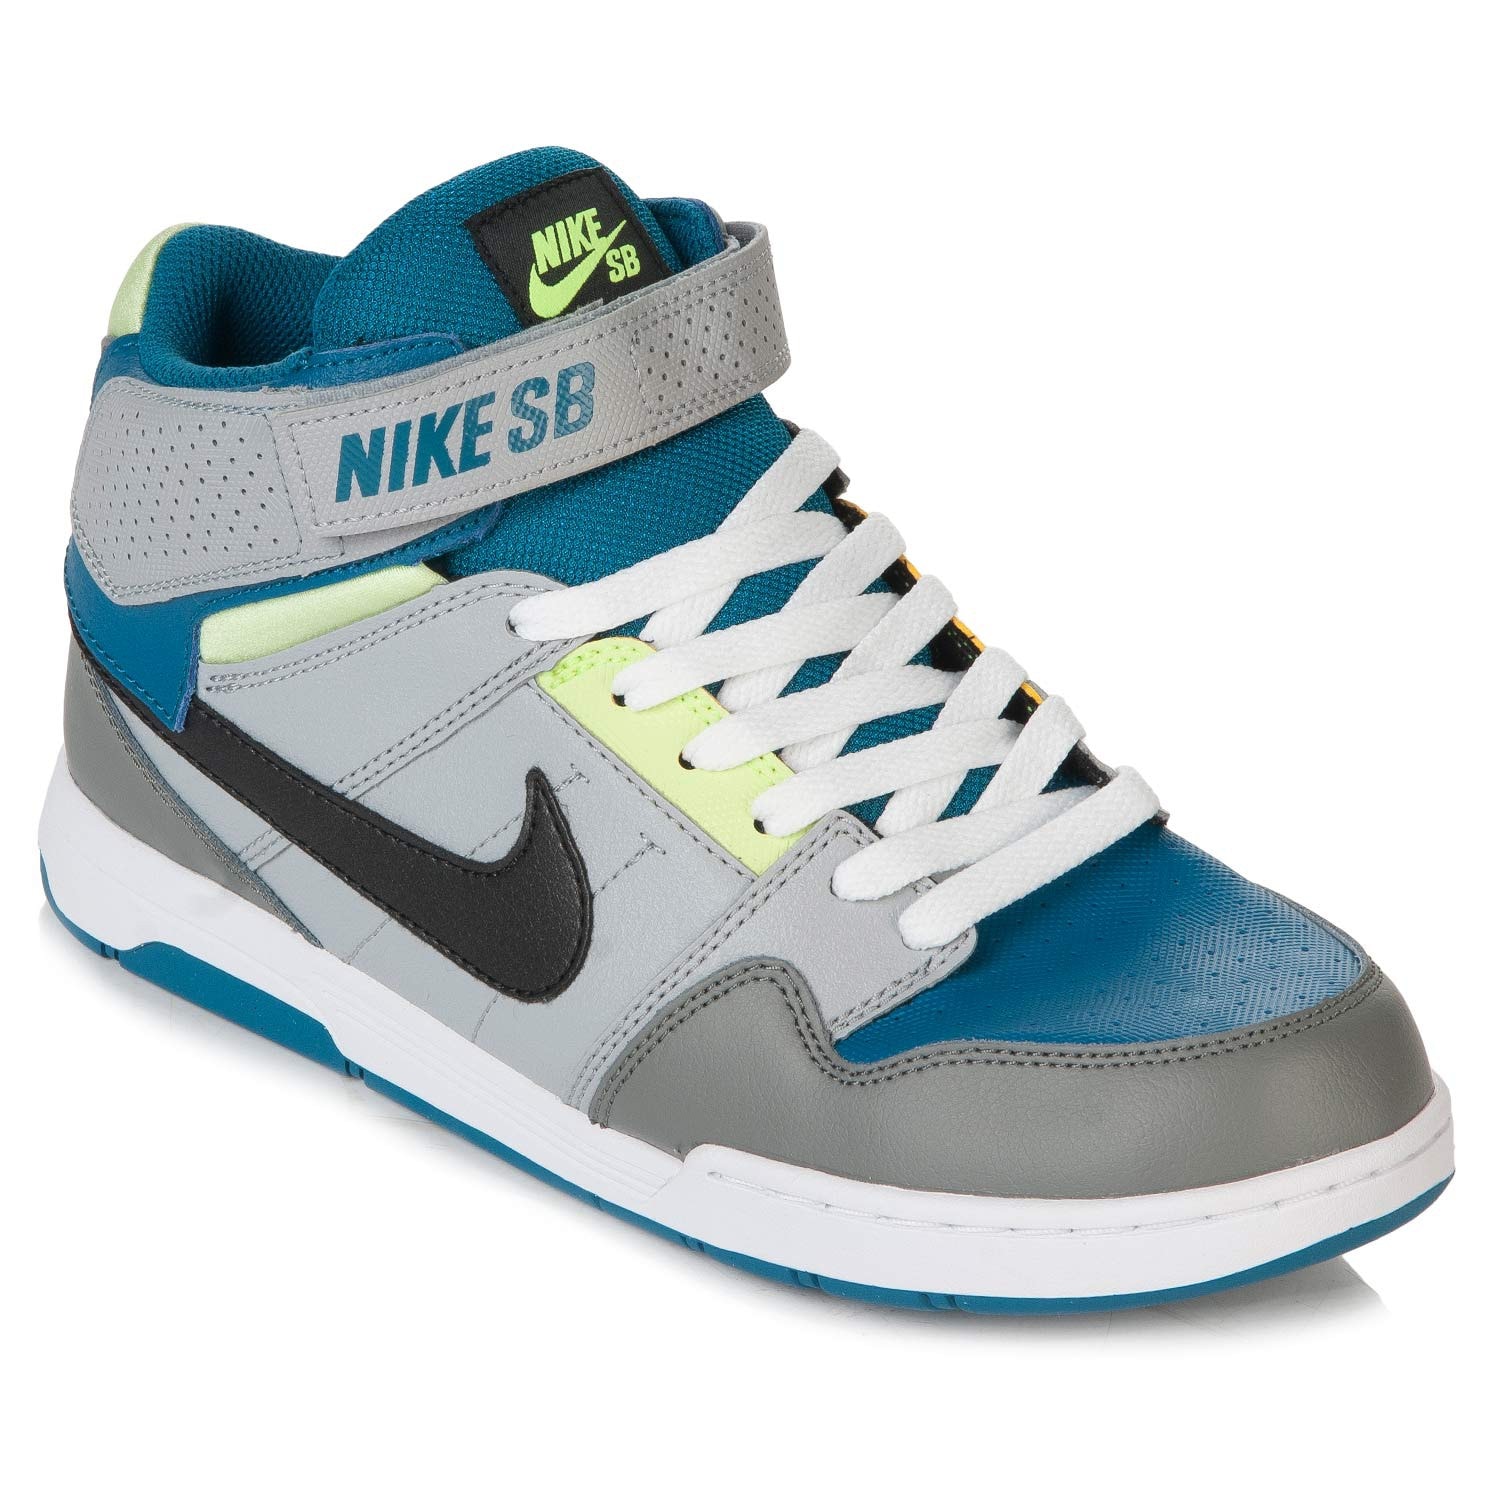 Sneakers Nike SB flt silver/black-voltice | Snowboard Zezula